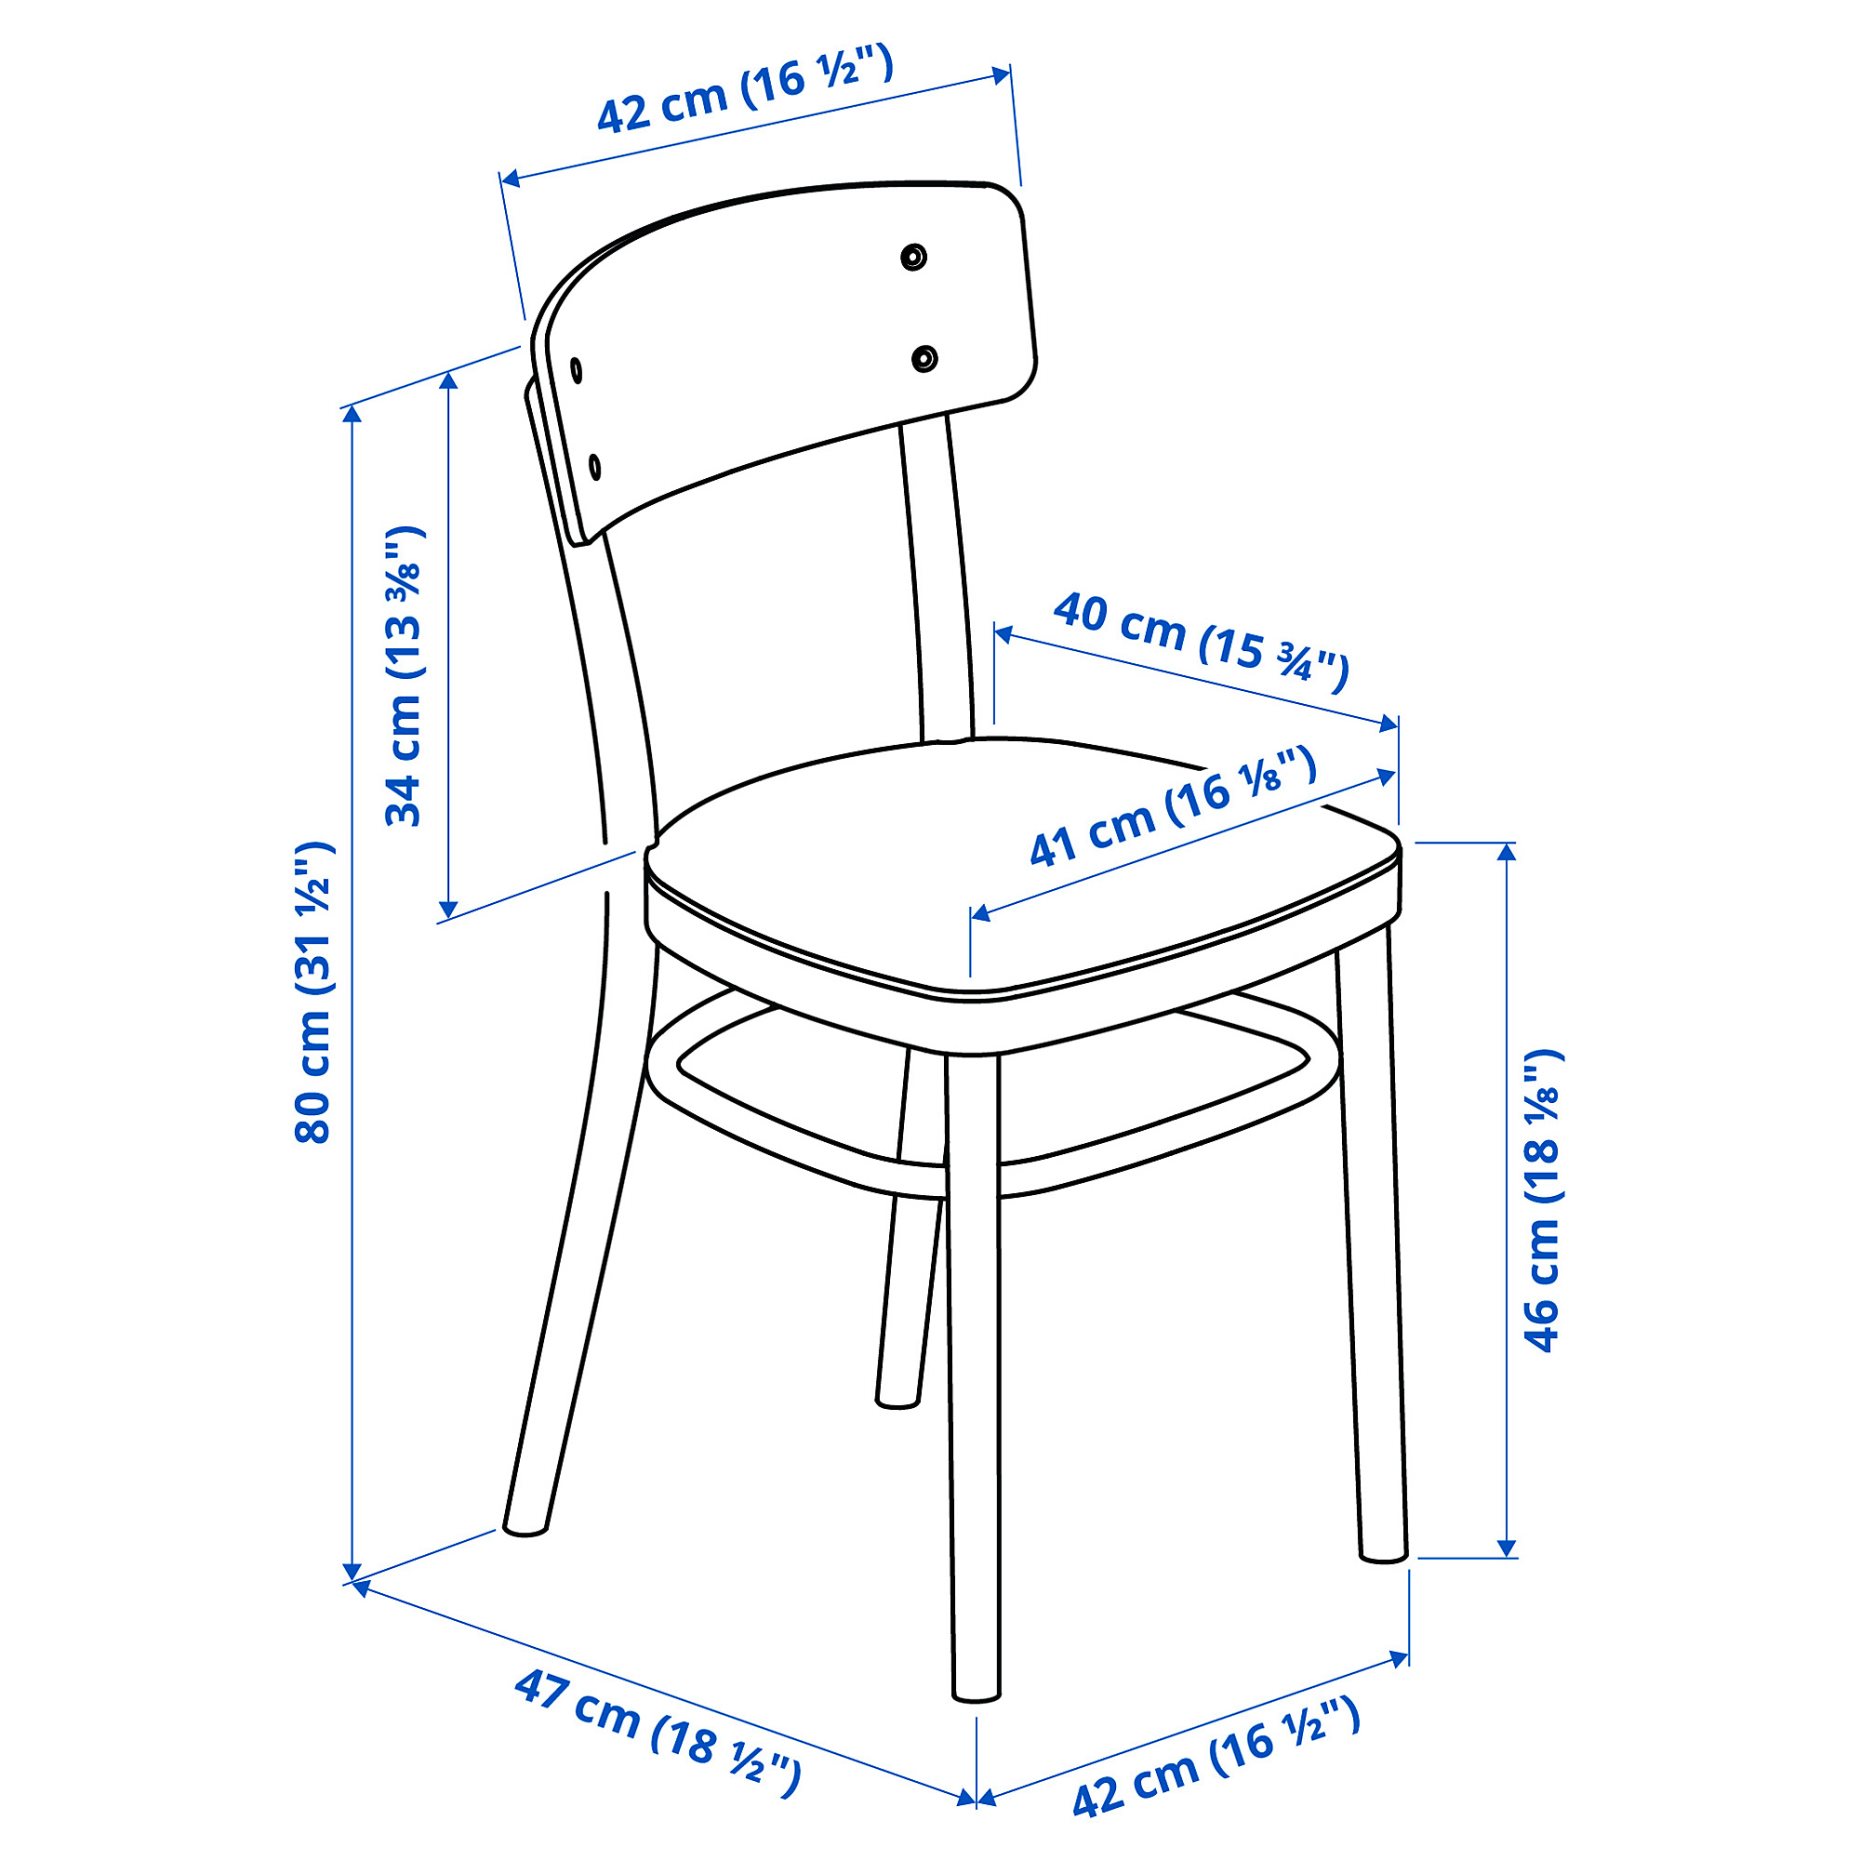 LISABO/IDOLF, τραπέζι και 4 καρέκλες, 192.521.87